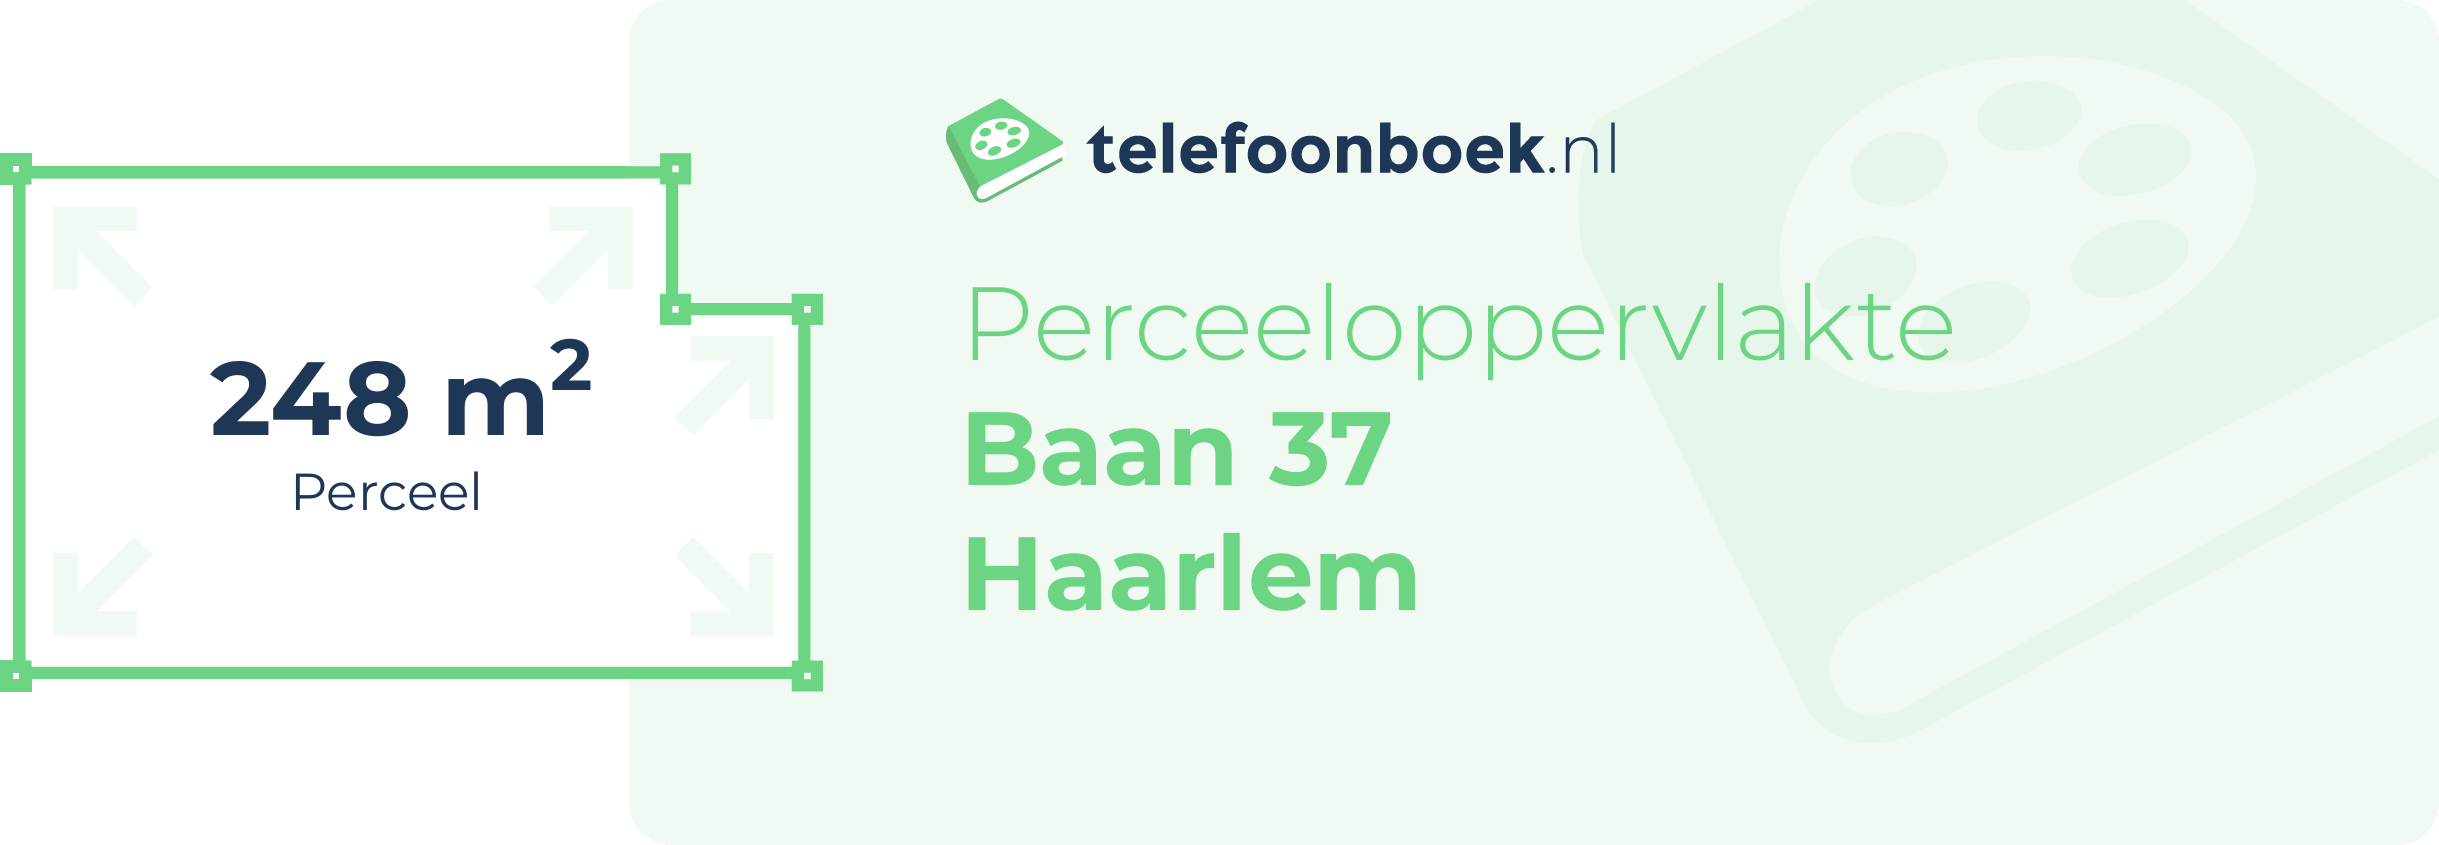 Perceeloppervlakte Baan 37 Haarlem